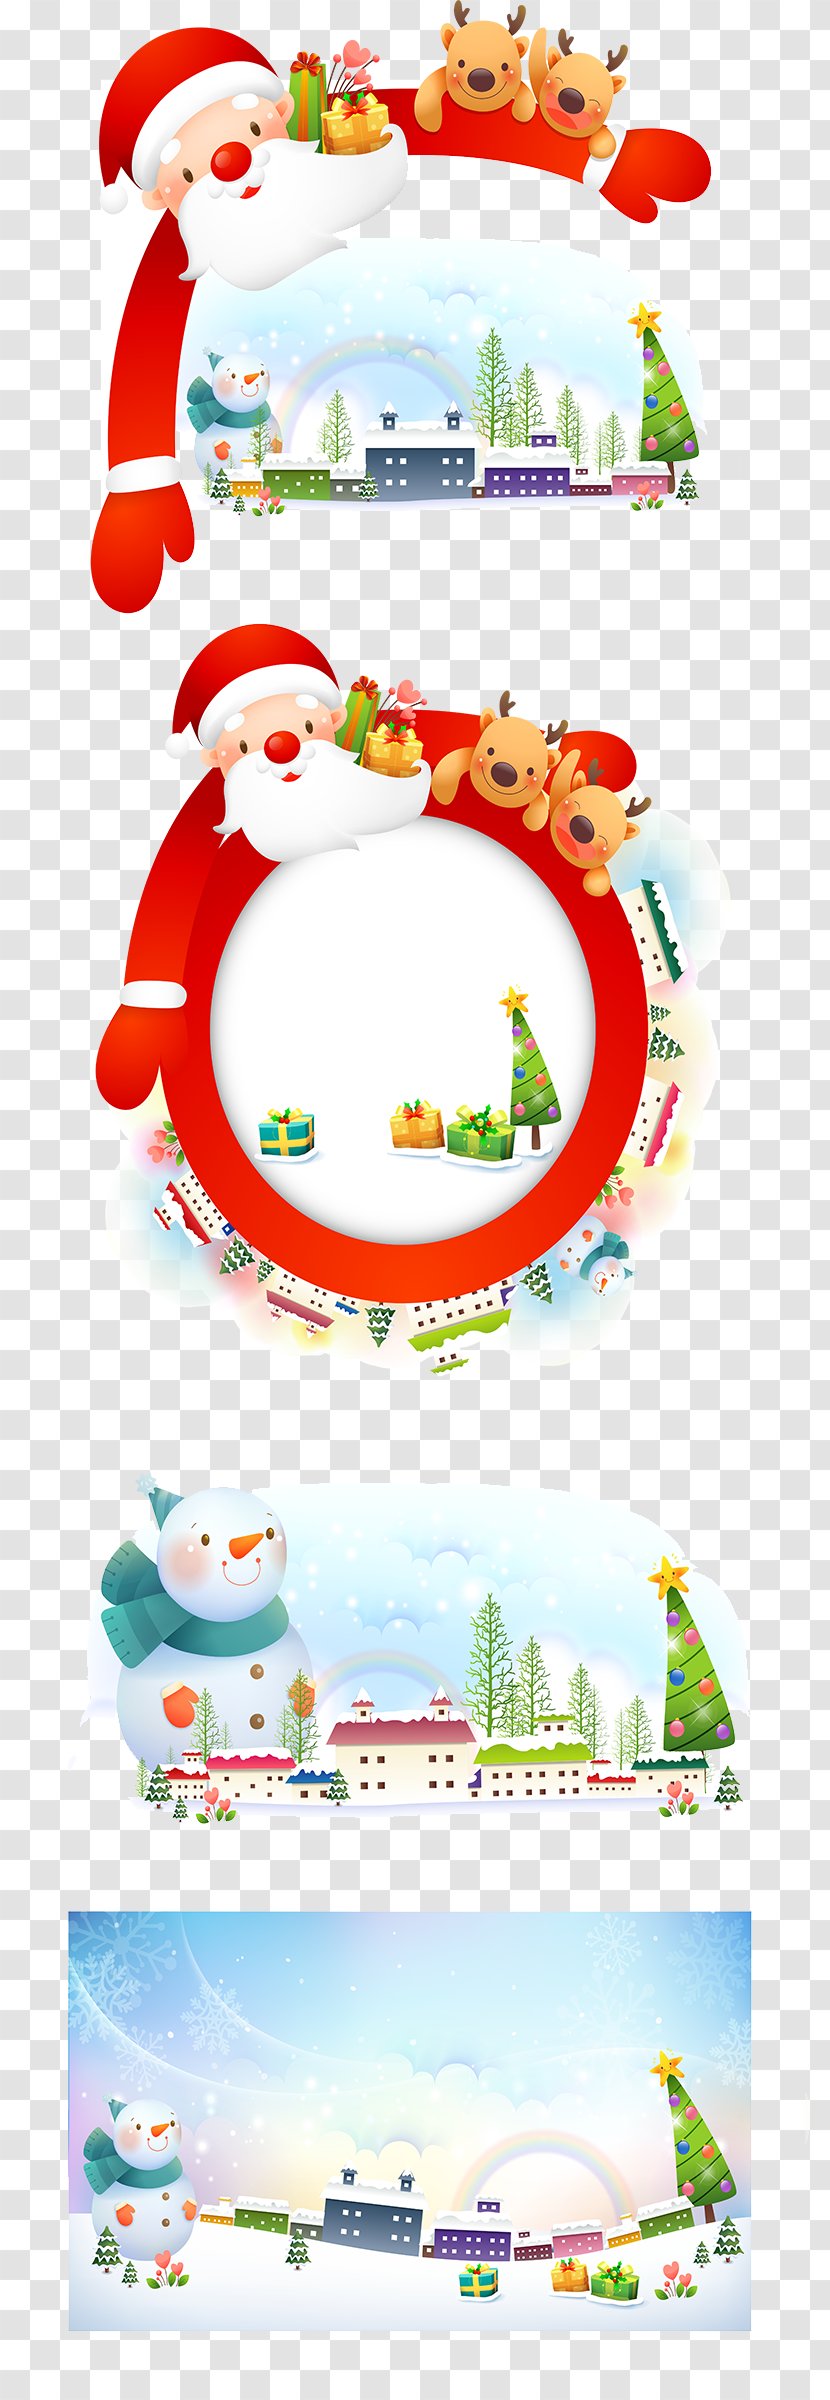 Santa Claus Christmas Euclidean Vector Illustration - Text - Decorative Borders Material Transparent PNG